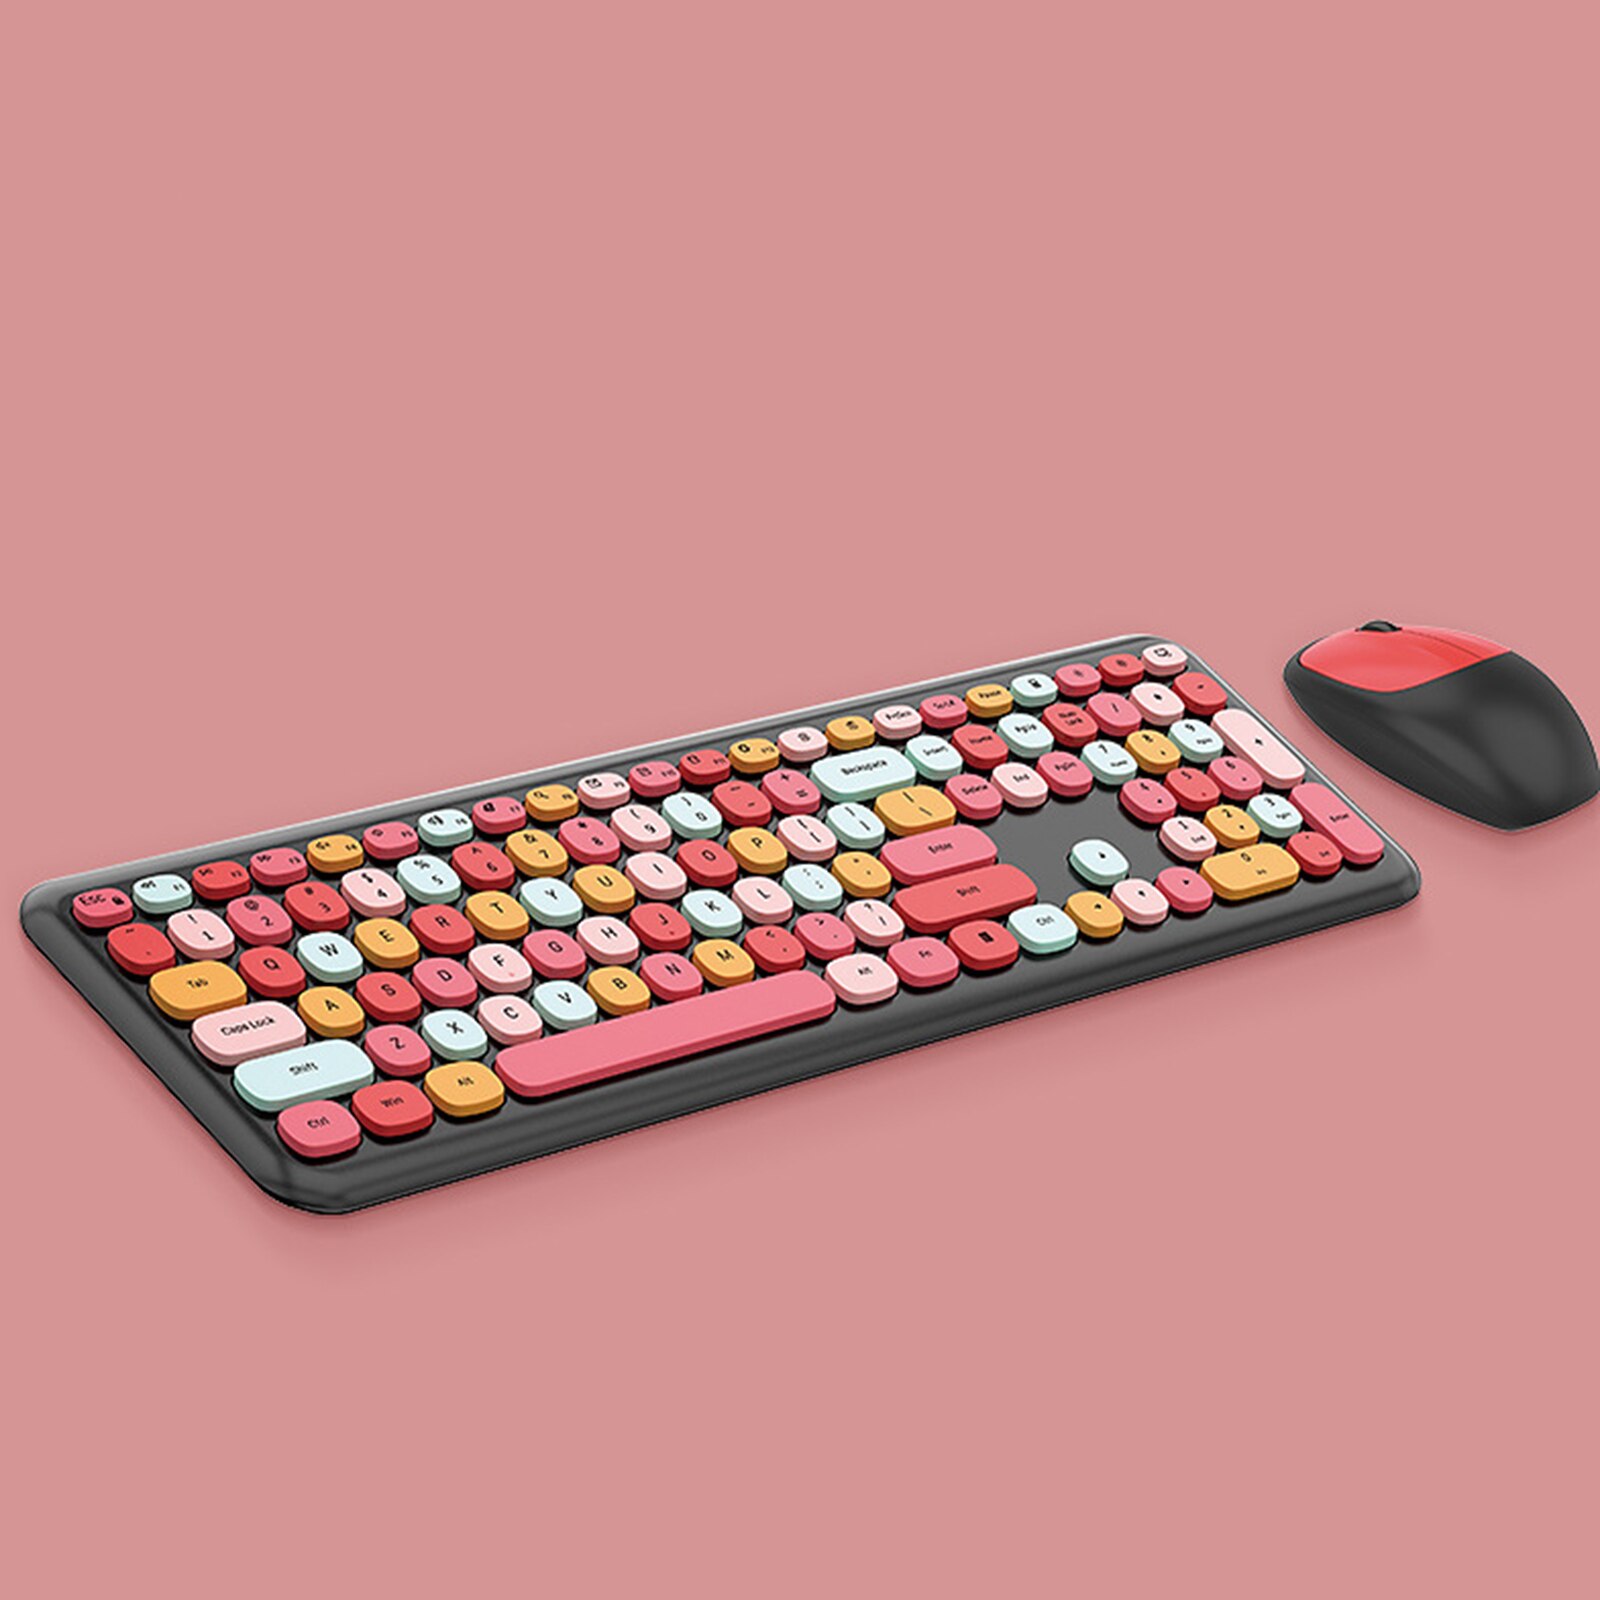 Mini Multi-Colour 2.4G Draadloze Toetsenbord En Muis Kit Voor Pc Laptop, Energiebesparing